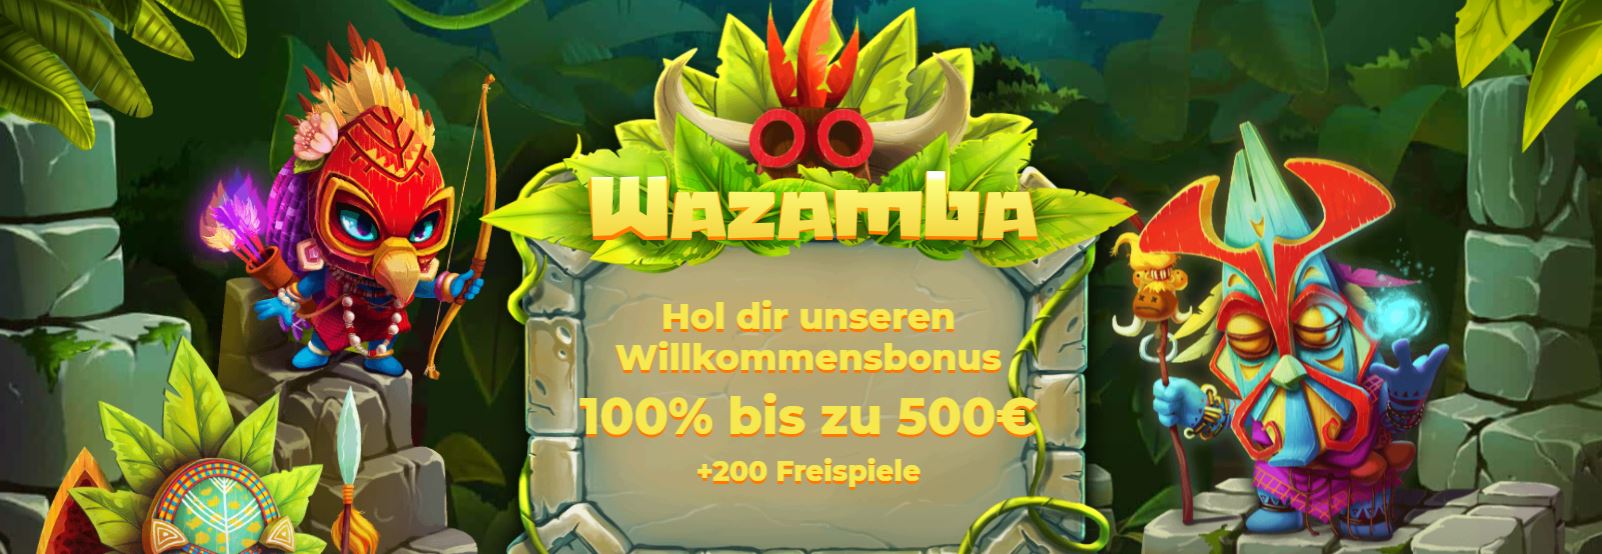 Wazamba Bonus